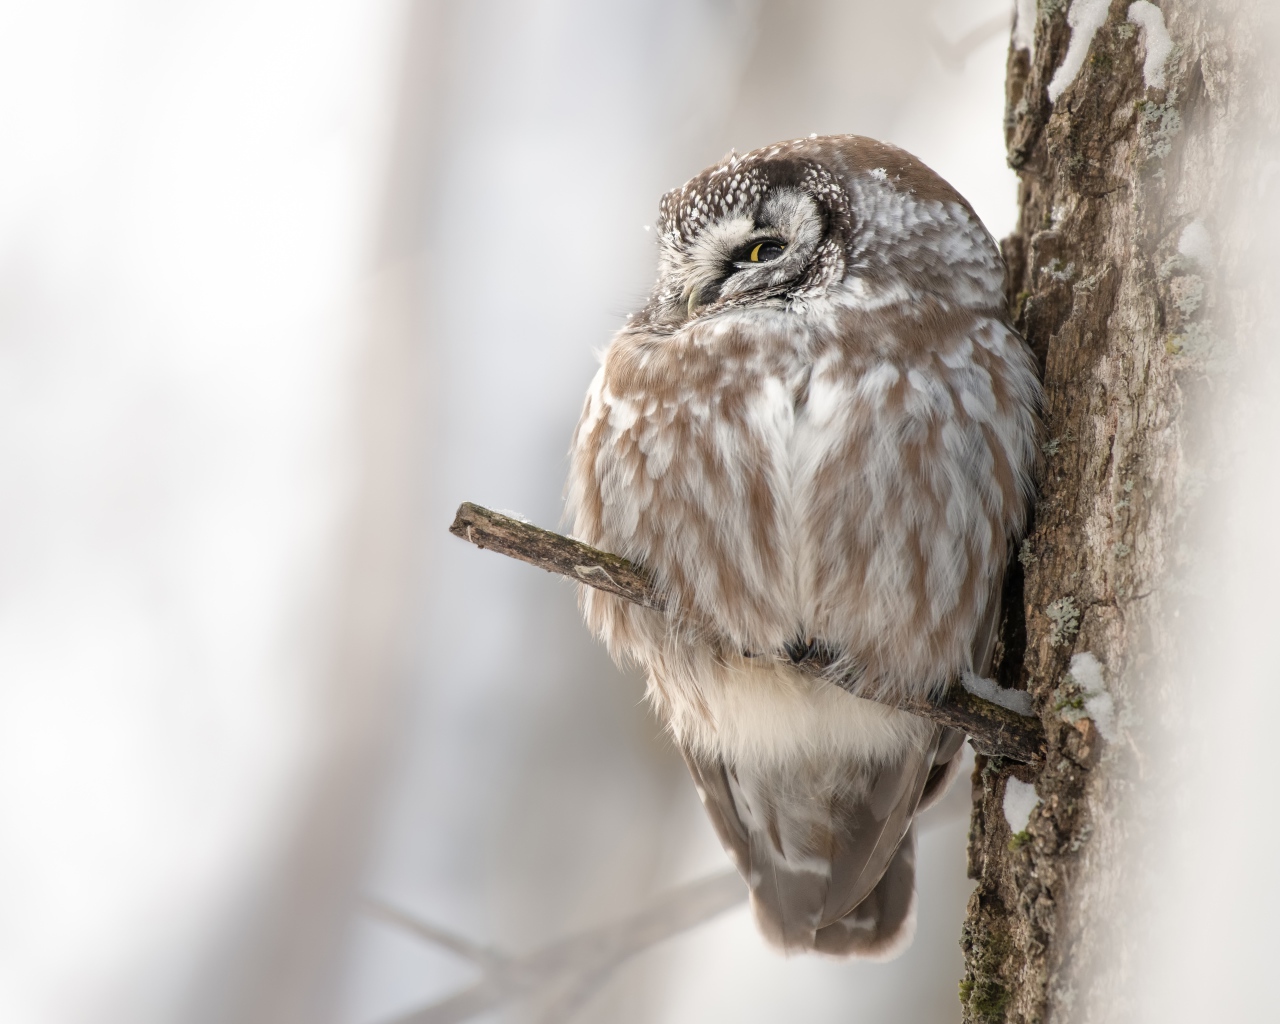 Owl sleeping on a tree branch